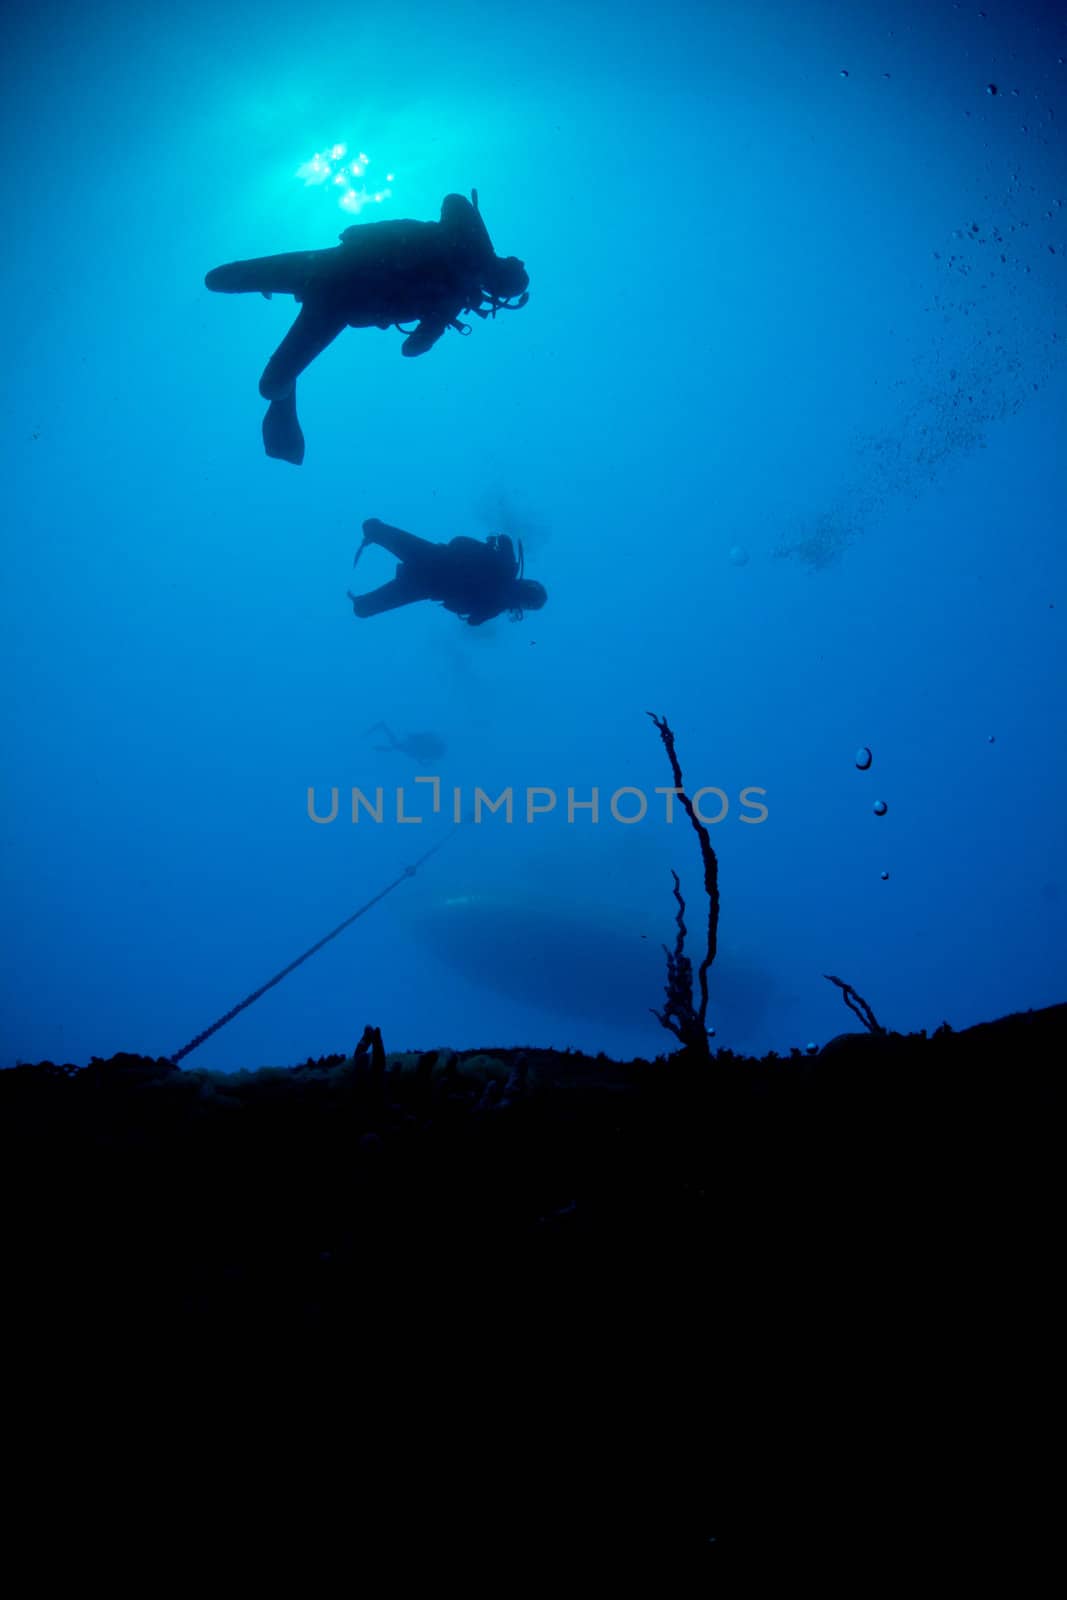 Silhouettes of scuba divers descending onto a wreck by MojoJojoFoto